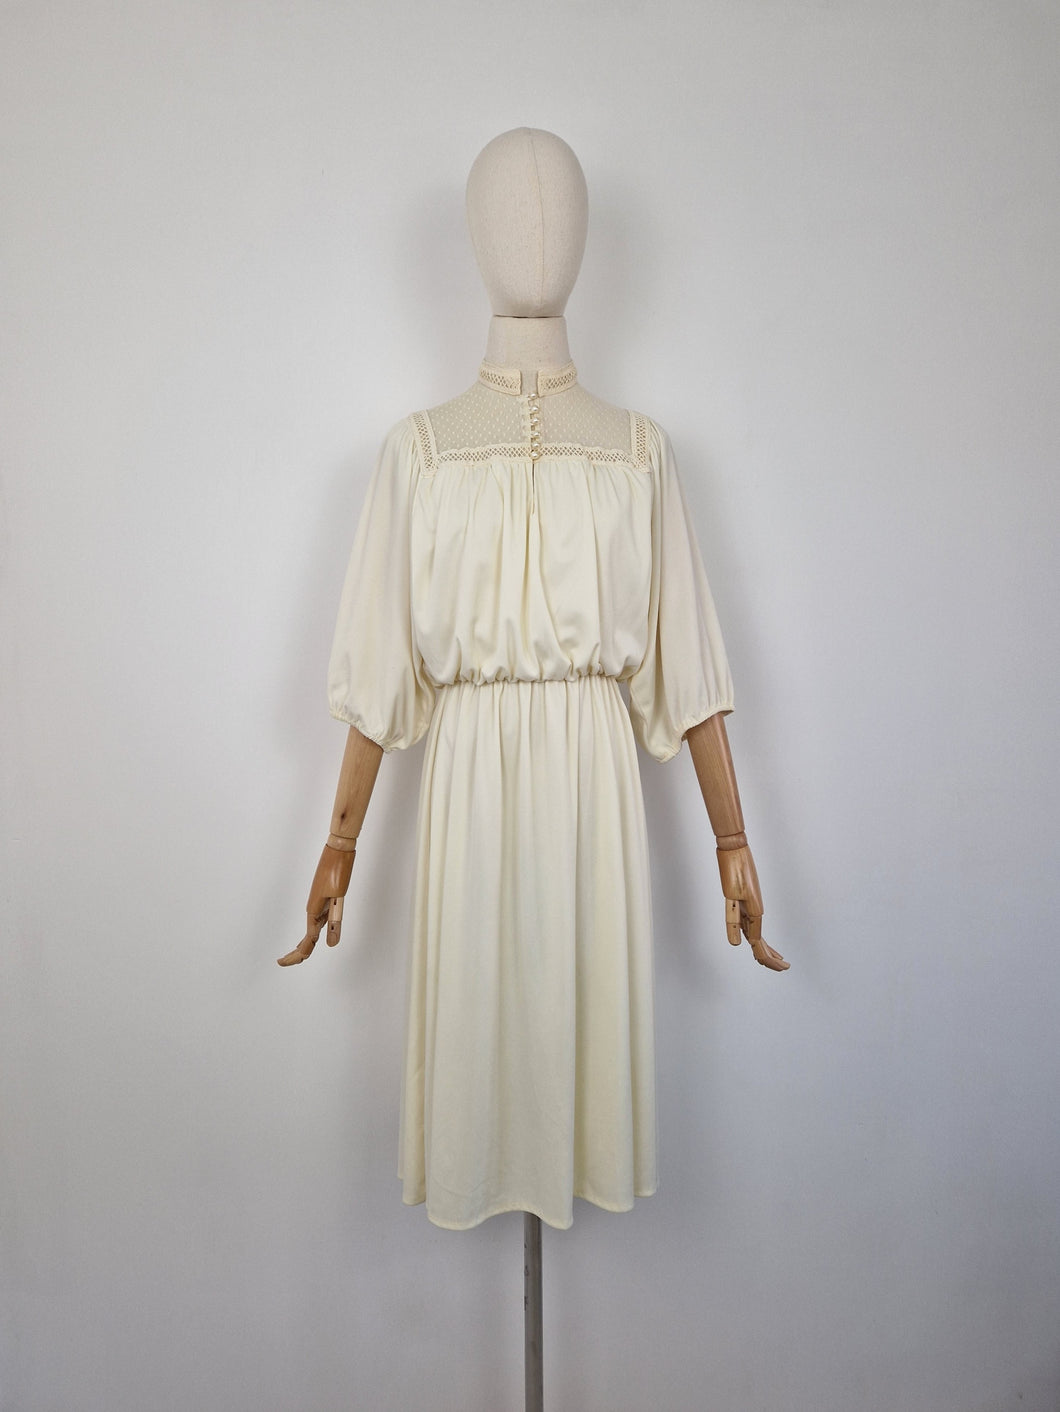 Vintage 70s Grecian cream lace dress